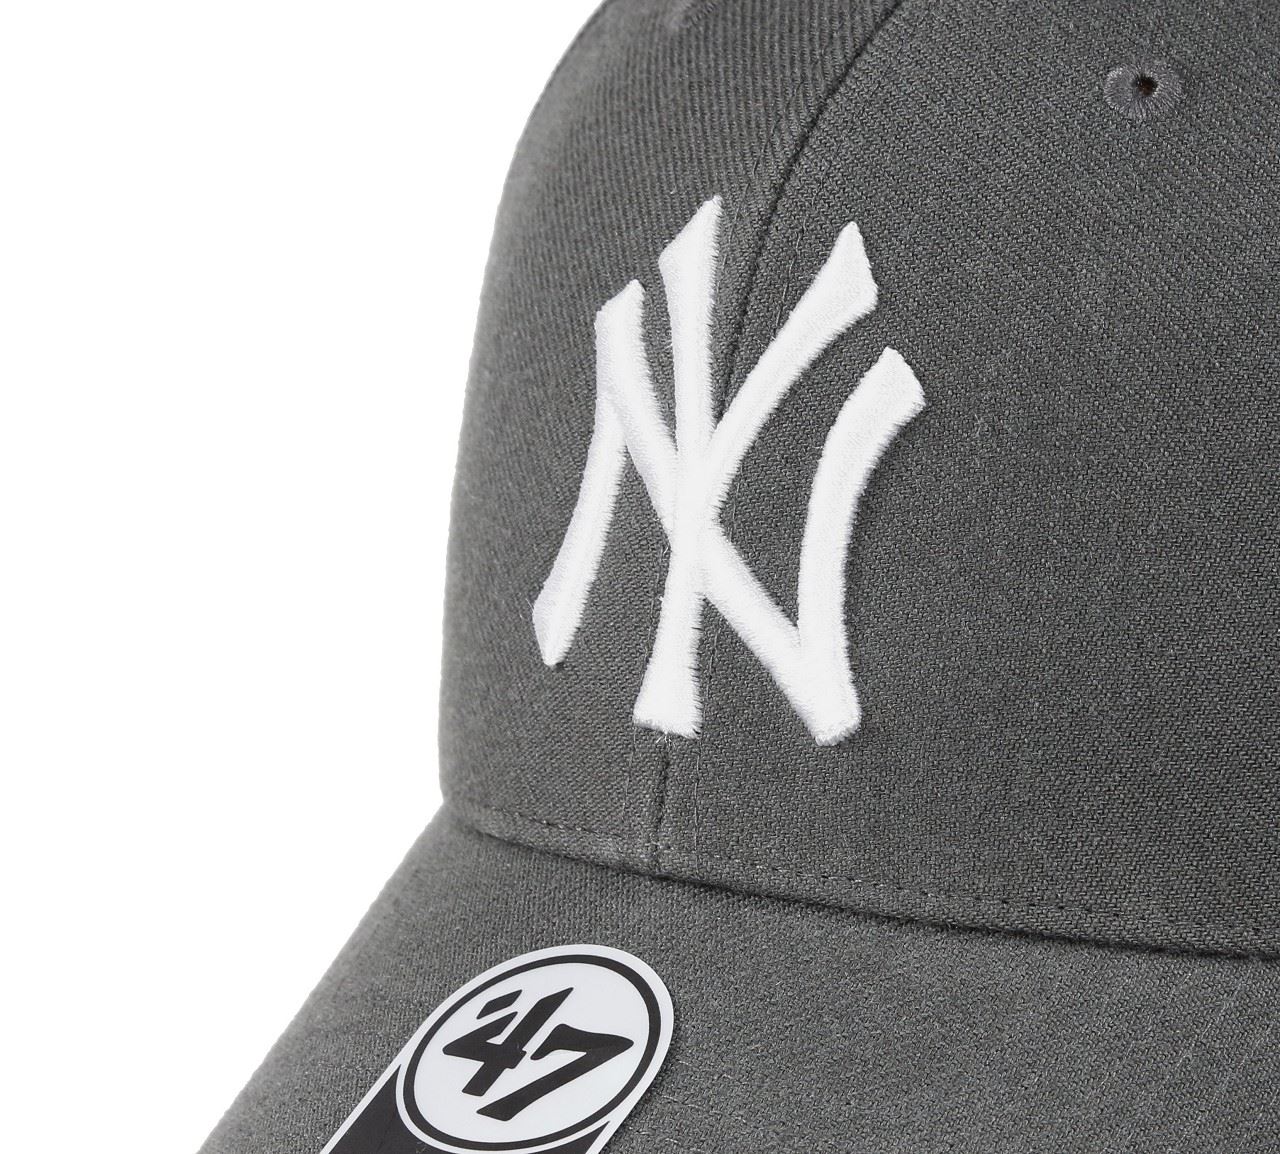 New York Yankees Charcoal MLB Most Value P. Cap '47